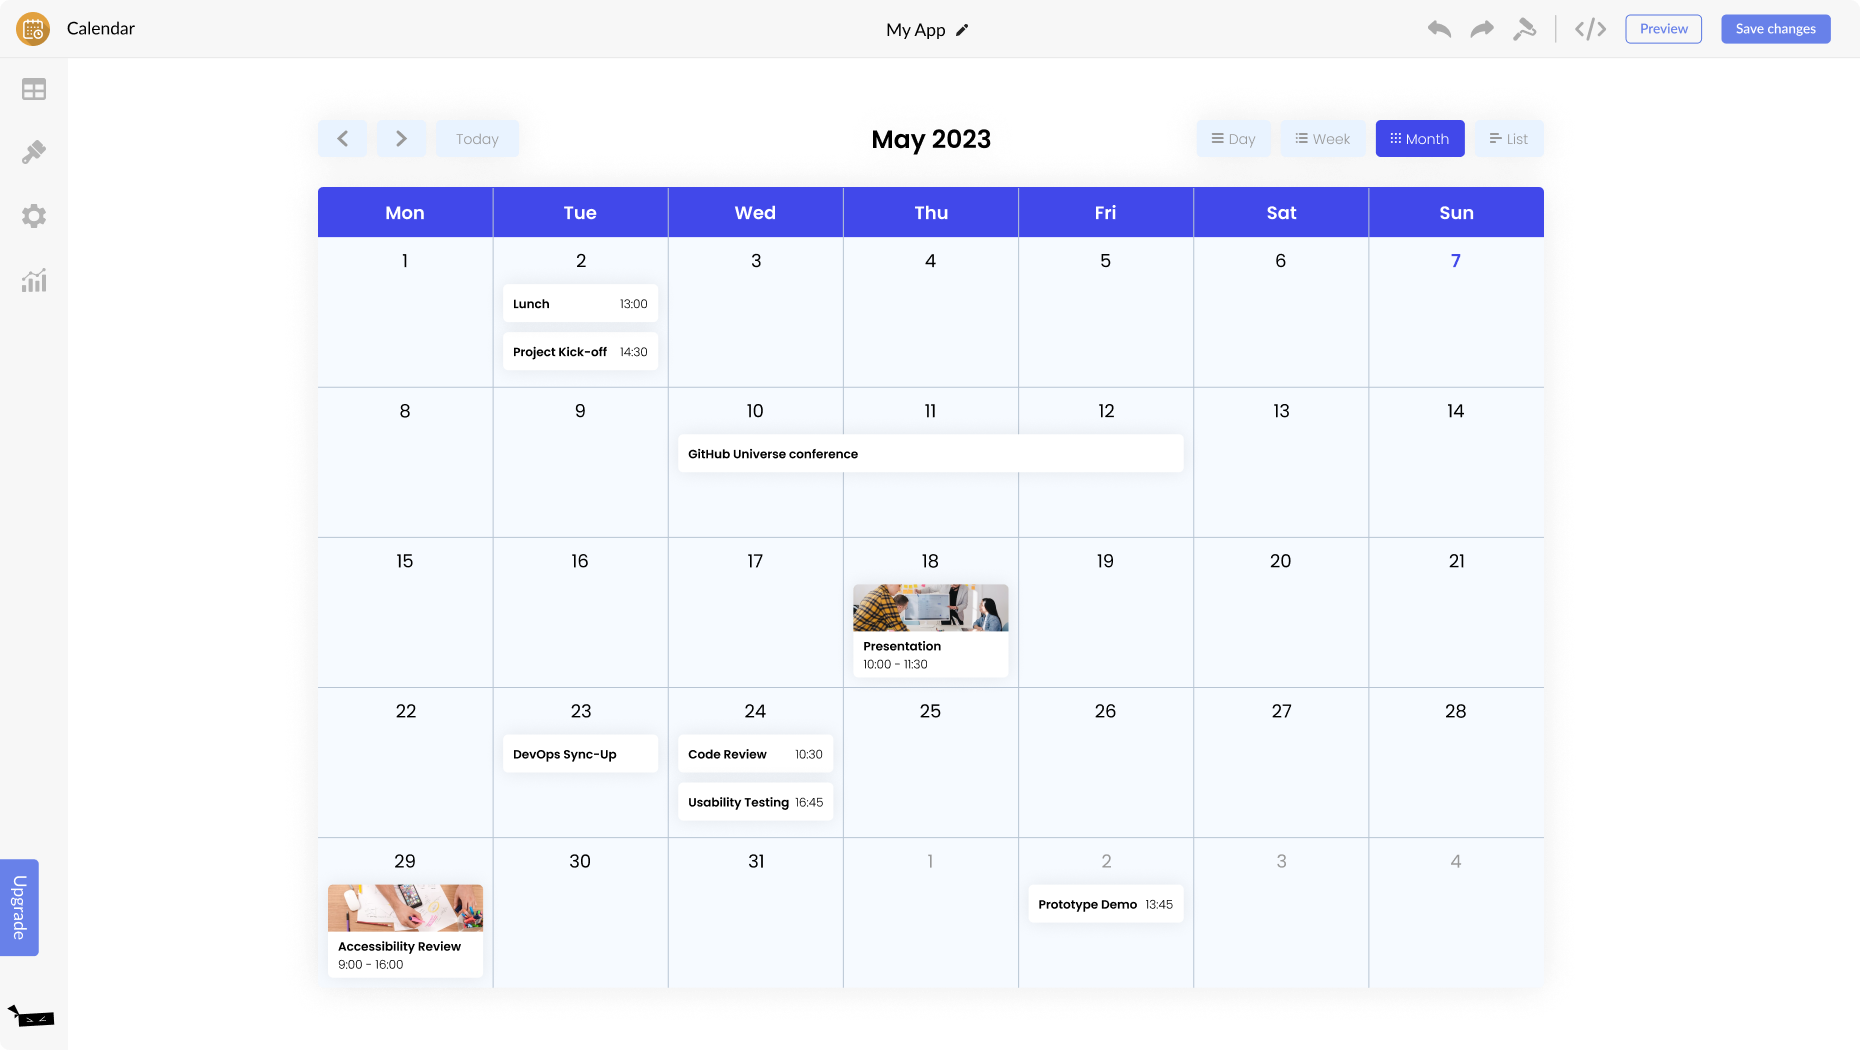 Calendar for Pagevamp